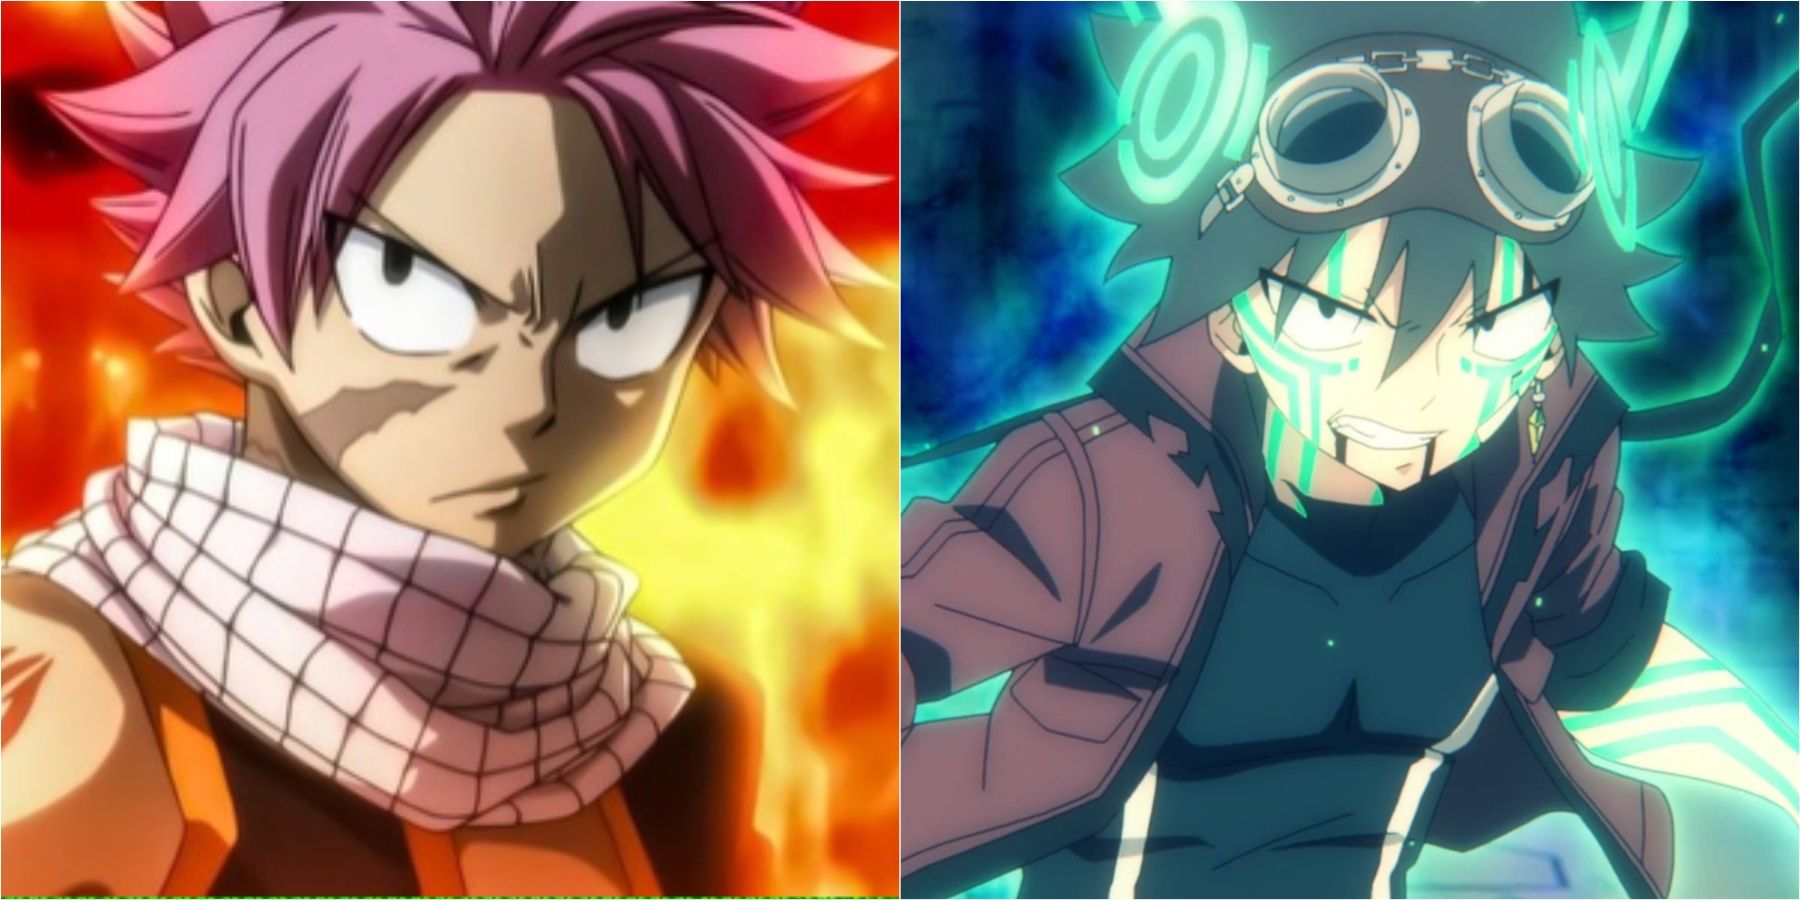 Similarities Between Shiki and Natsu